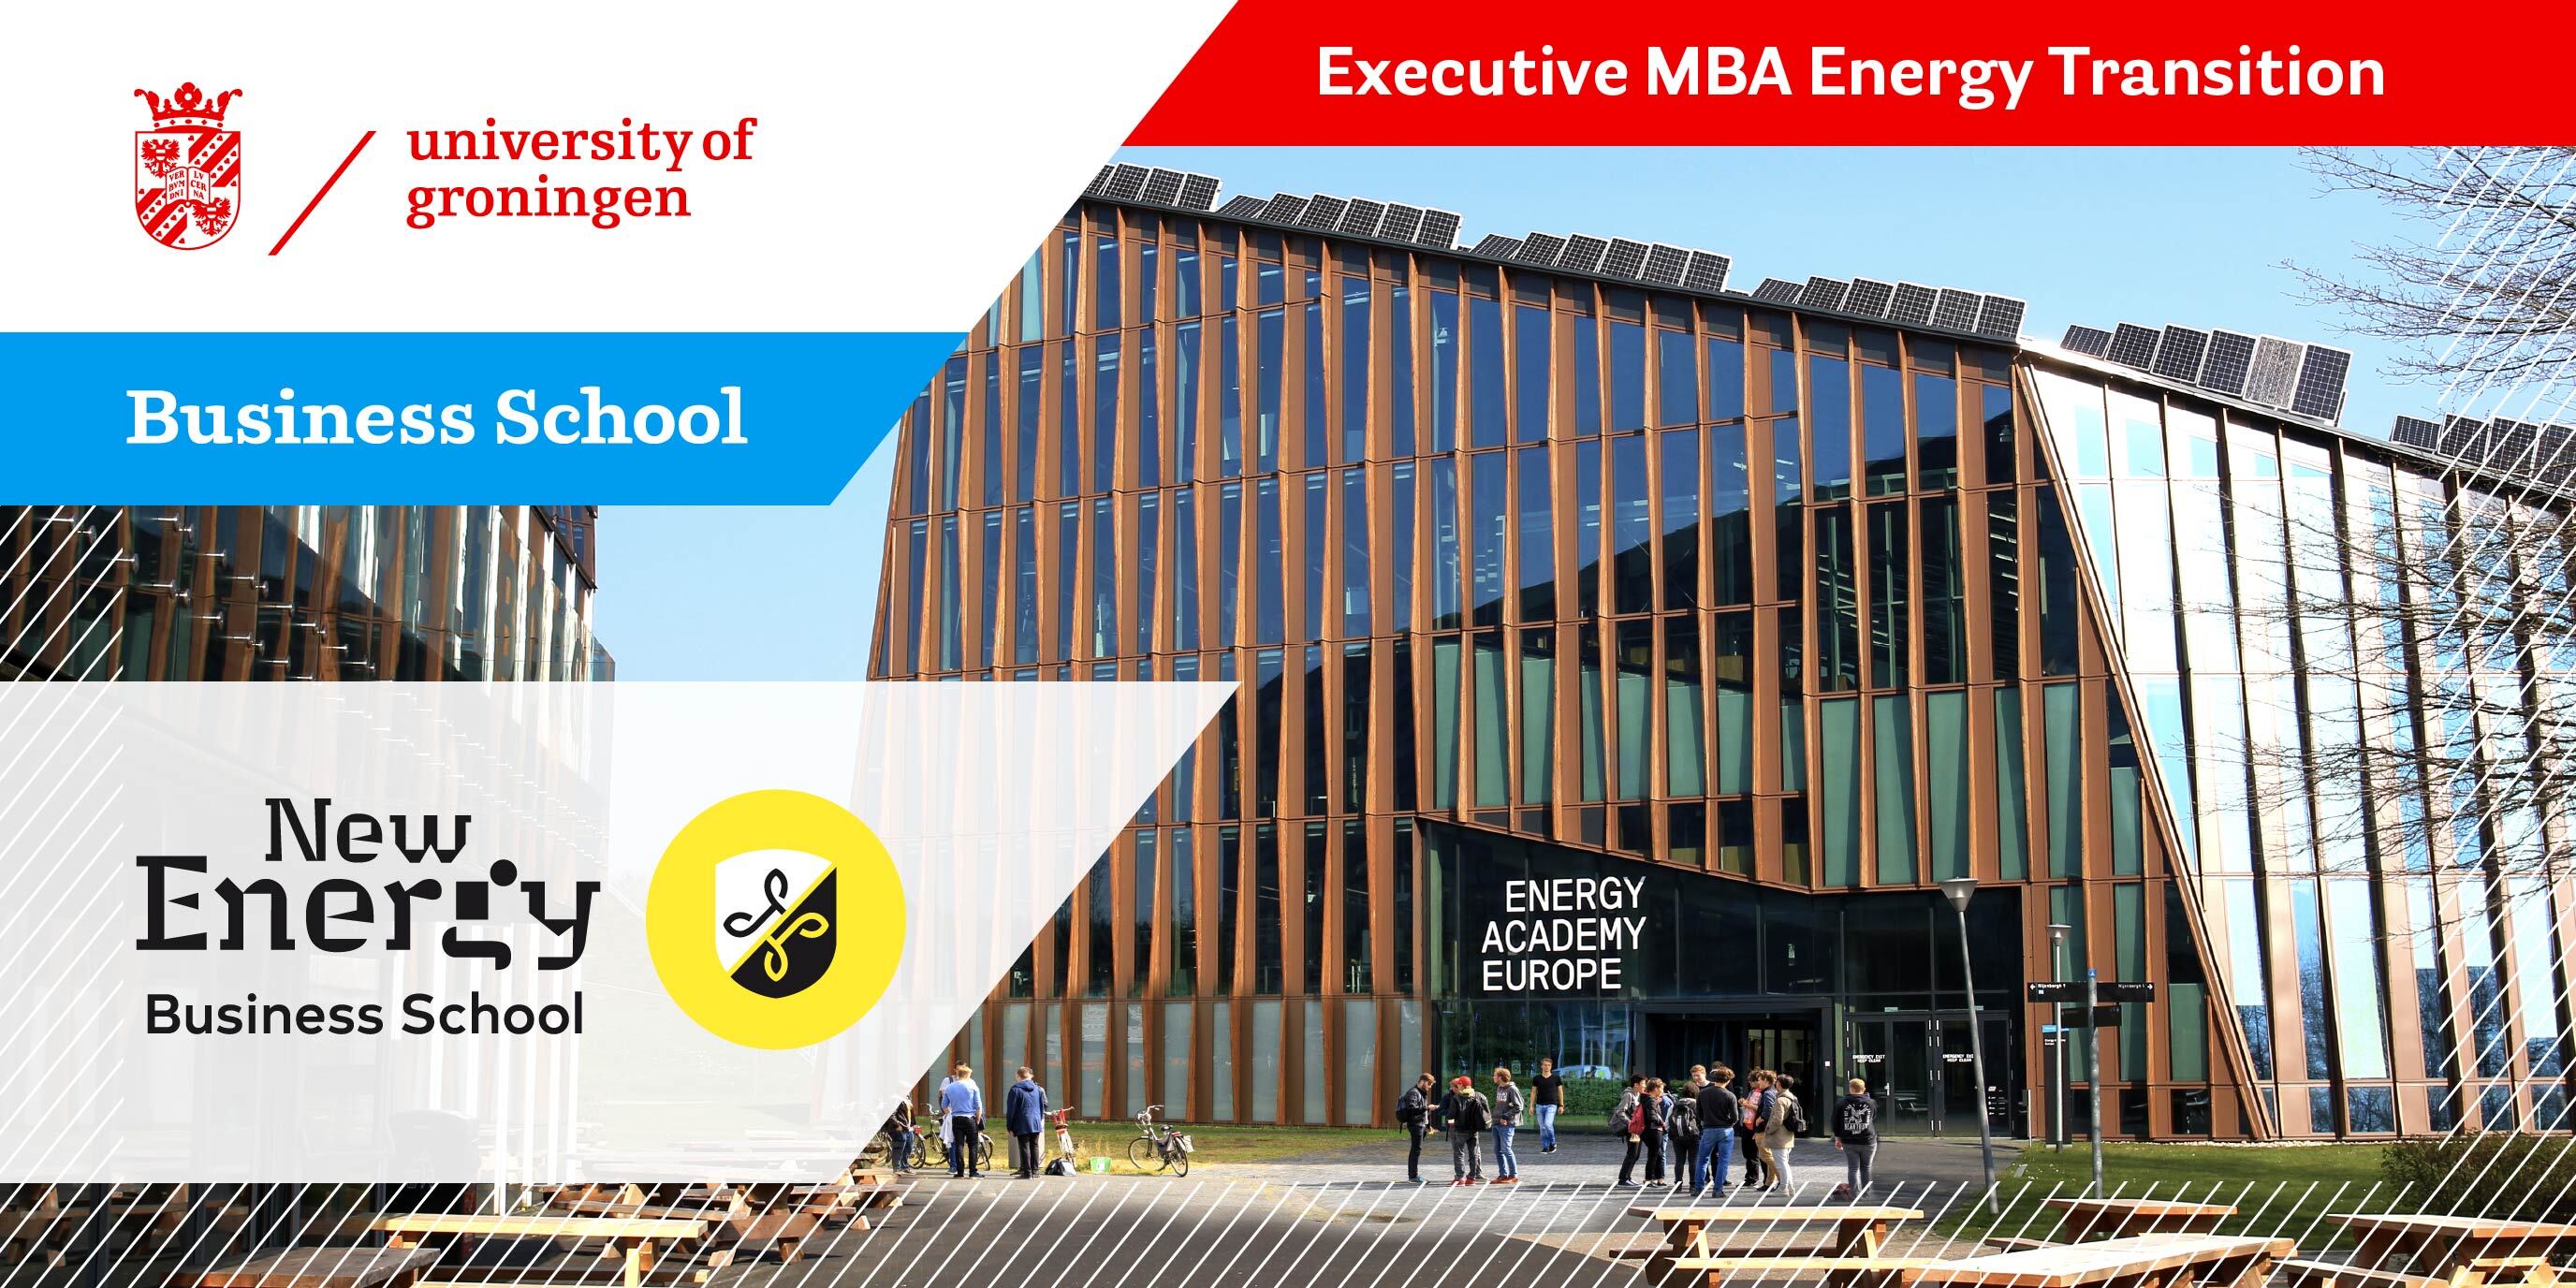 Executive MBA Energy Transition